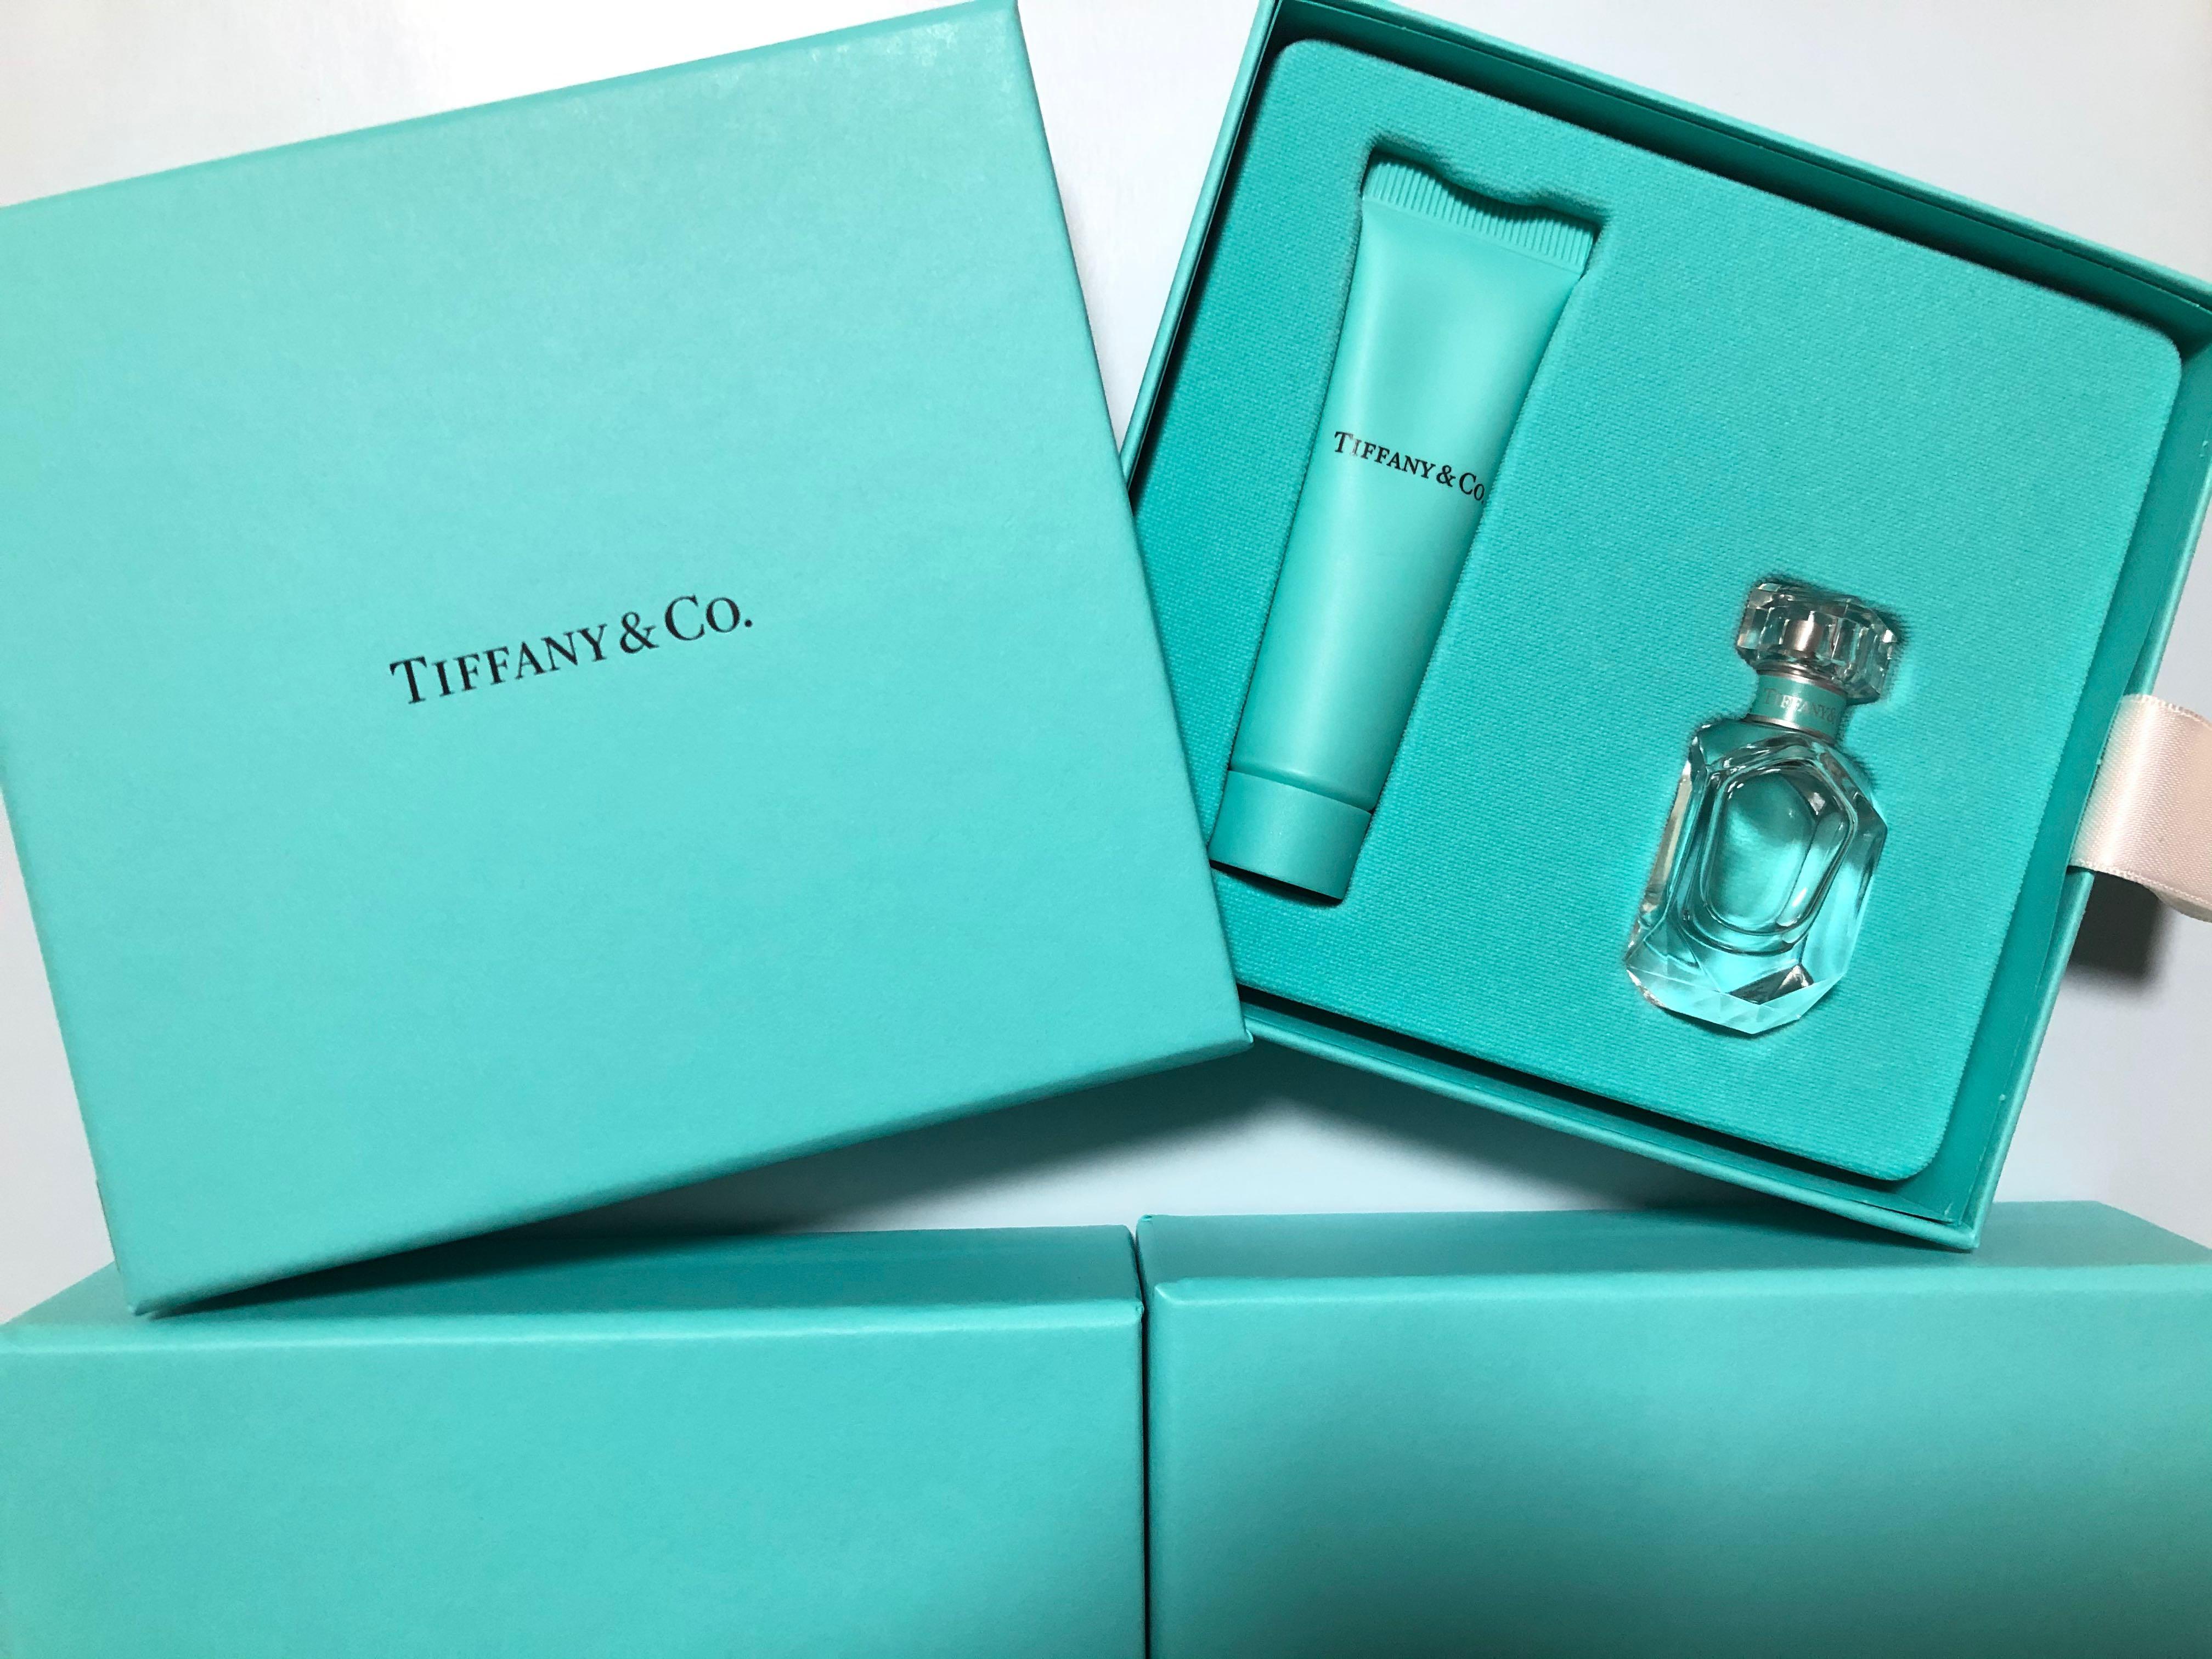 tiffany perfume gift box